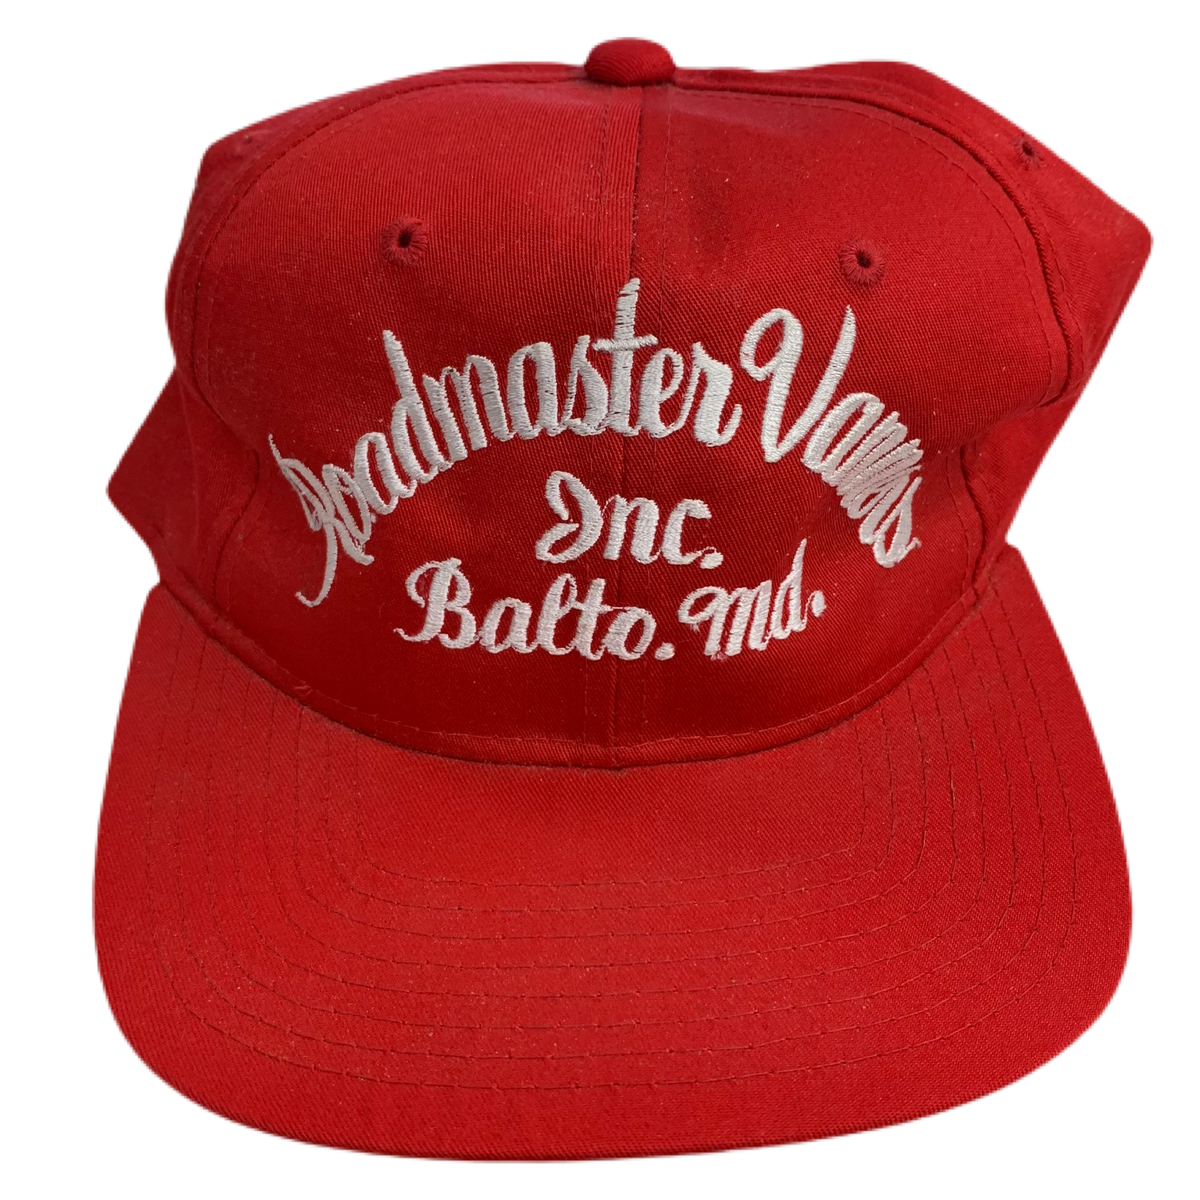 Vintage Roadmaster Vanners Inc &quot;Balto. MD&quot; Snapback Hat